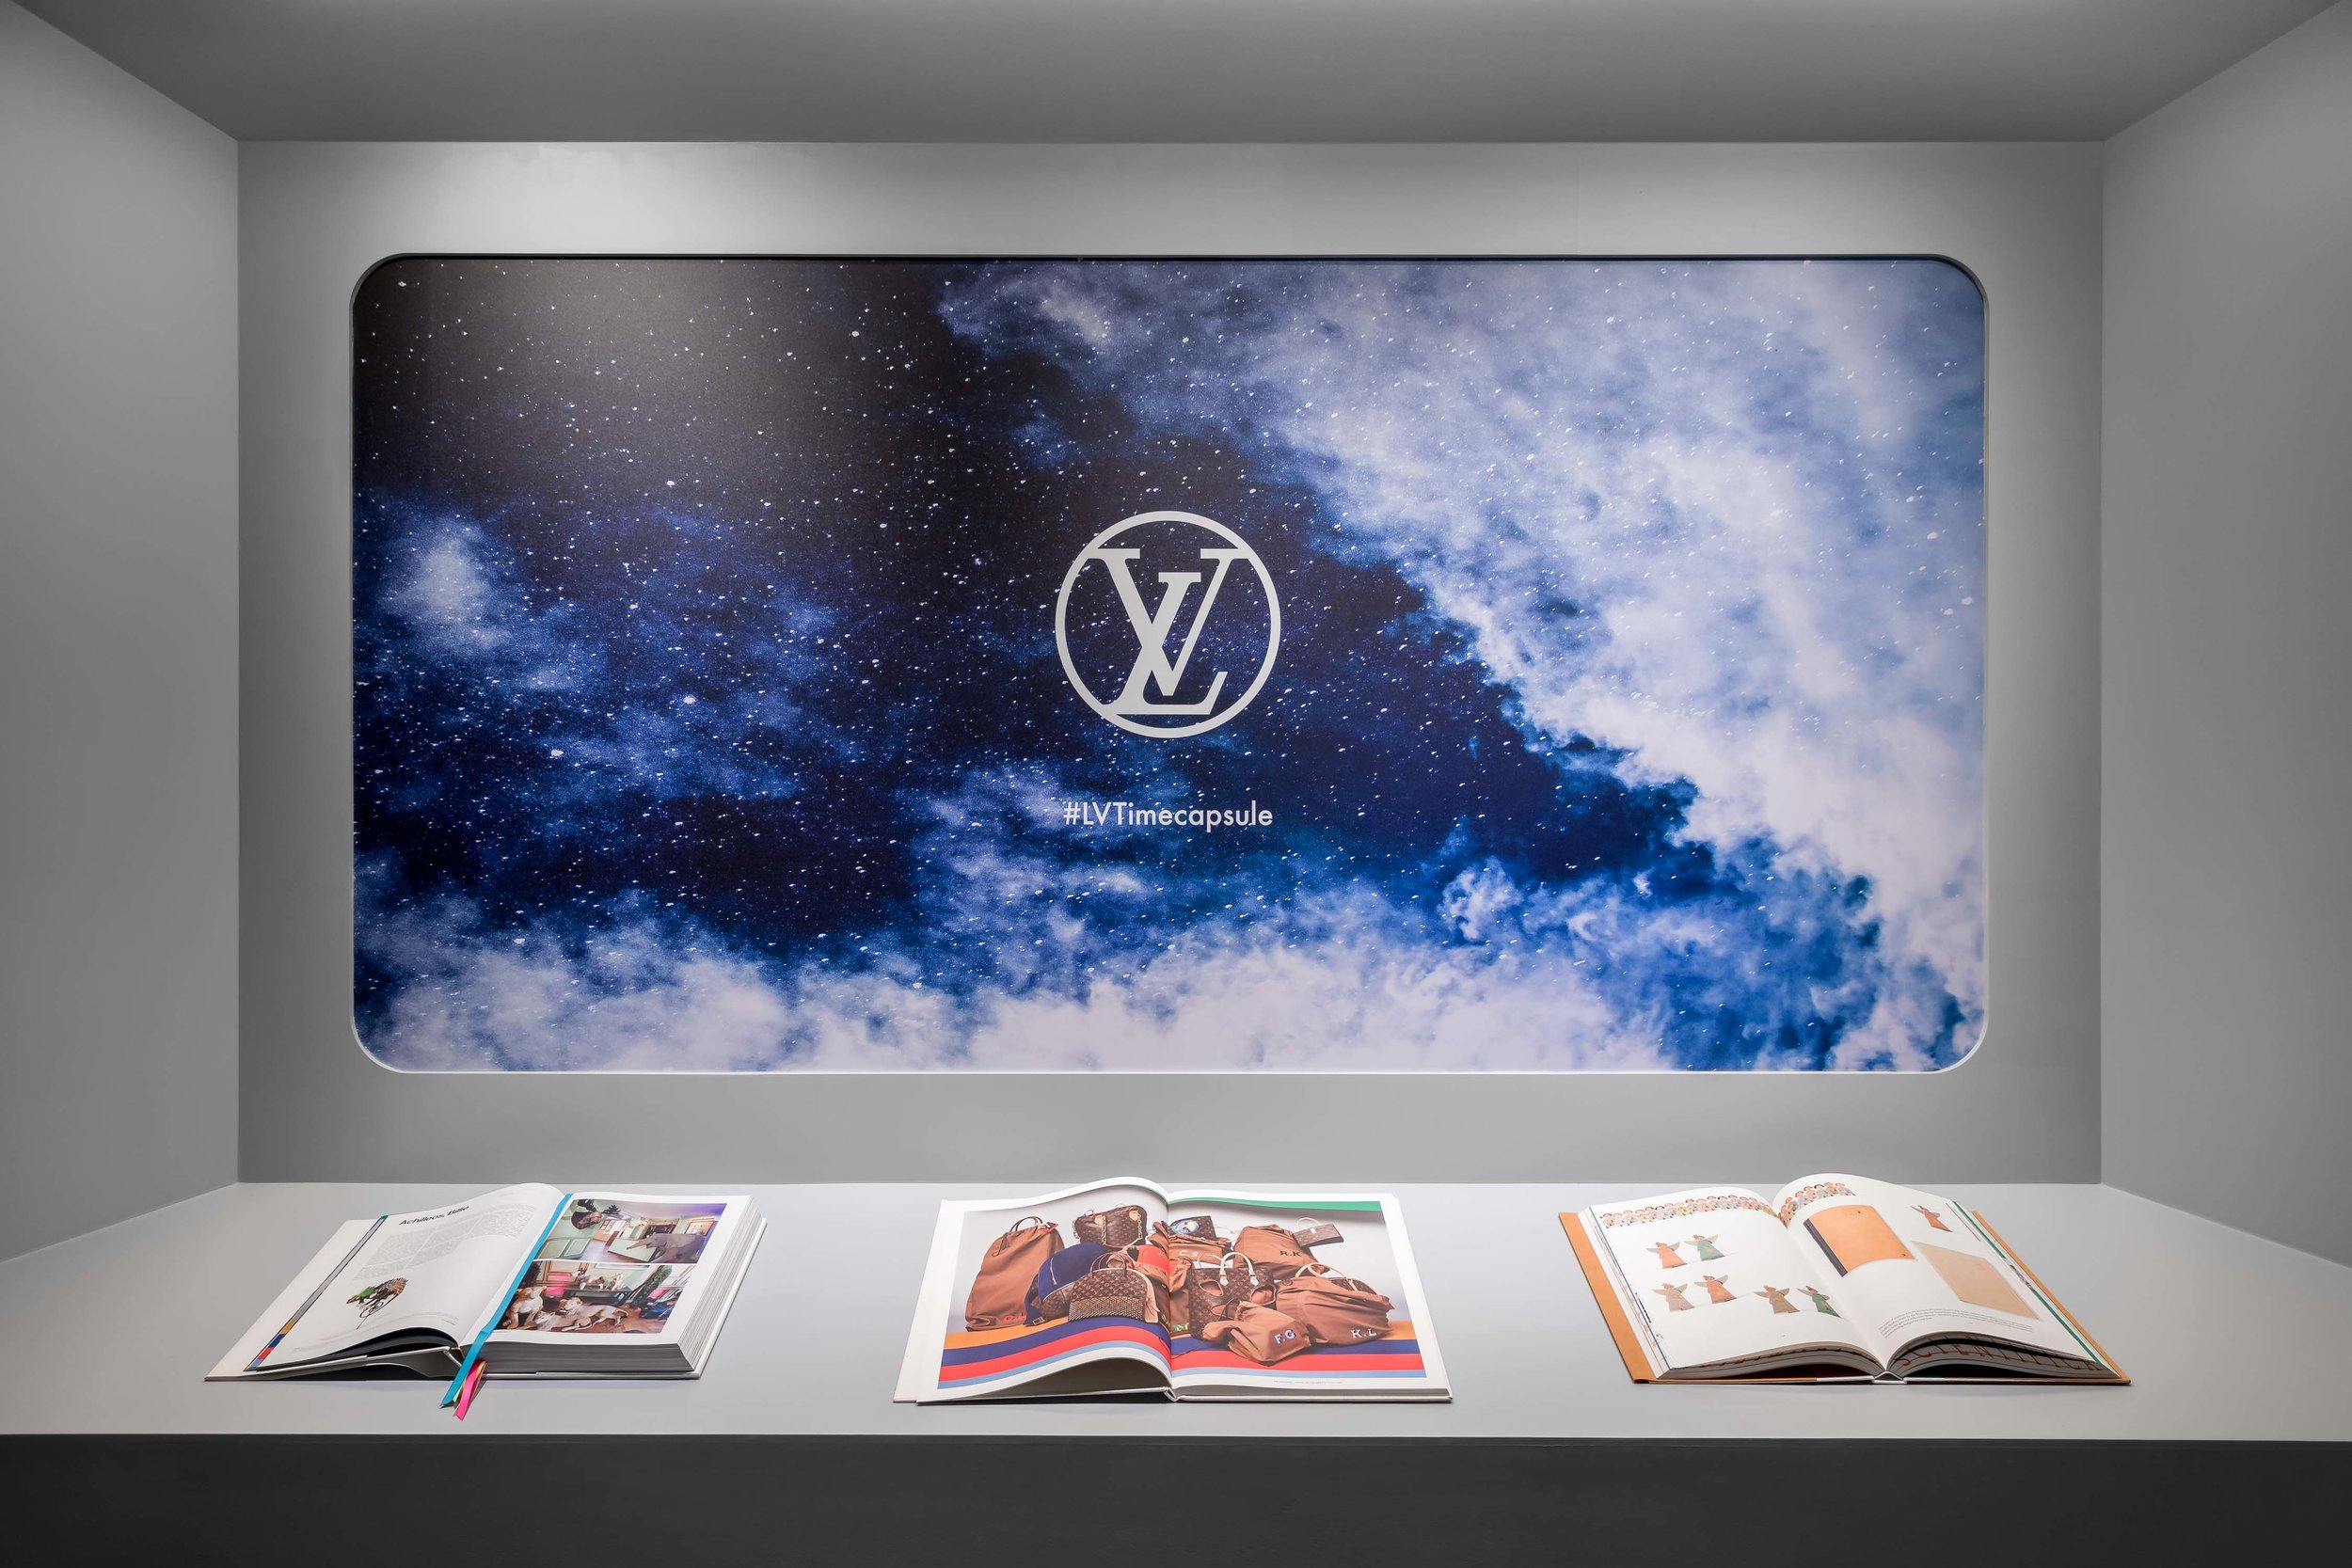 Louis Vuitton Time Capsule Collection